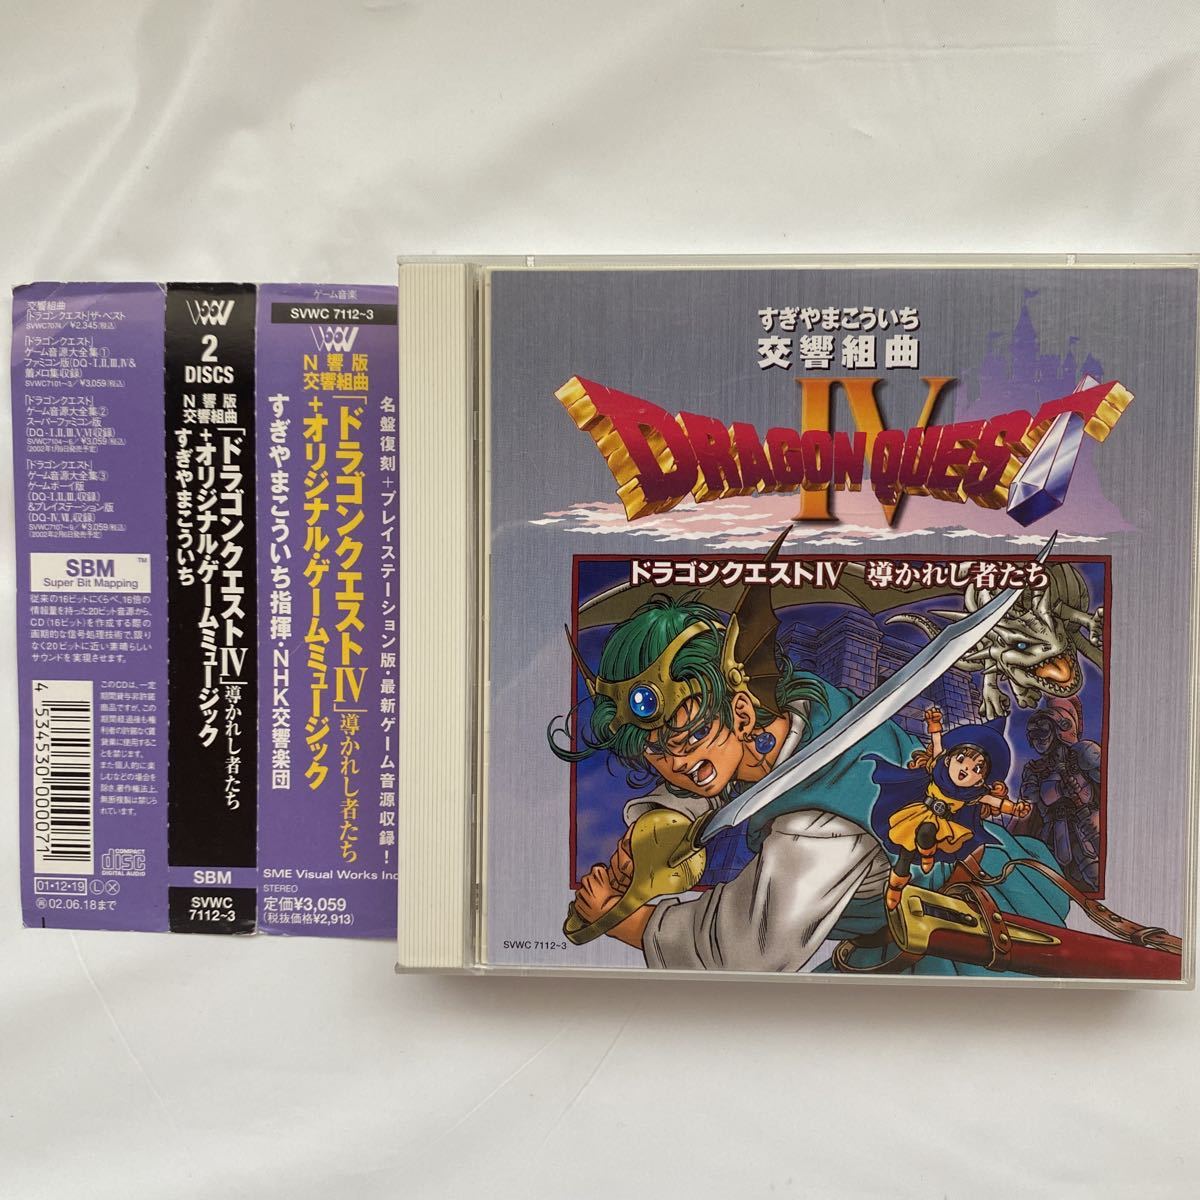 2CD........ реверберация Kumikyoku Dragon Quest IV... человек ..DRAGON QUEST IV б/у товар 